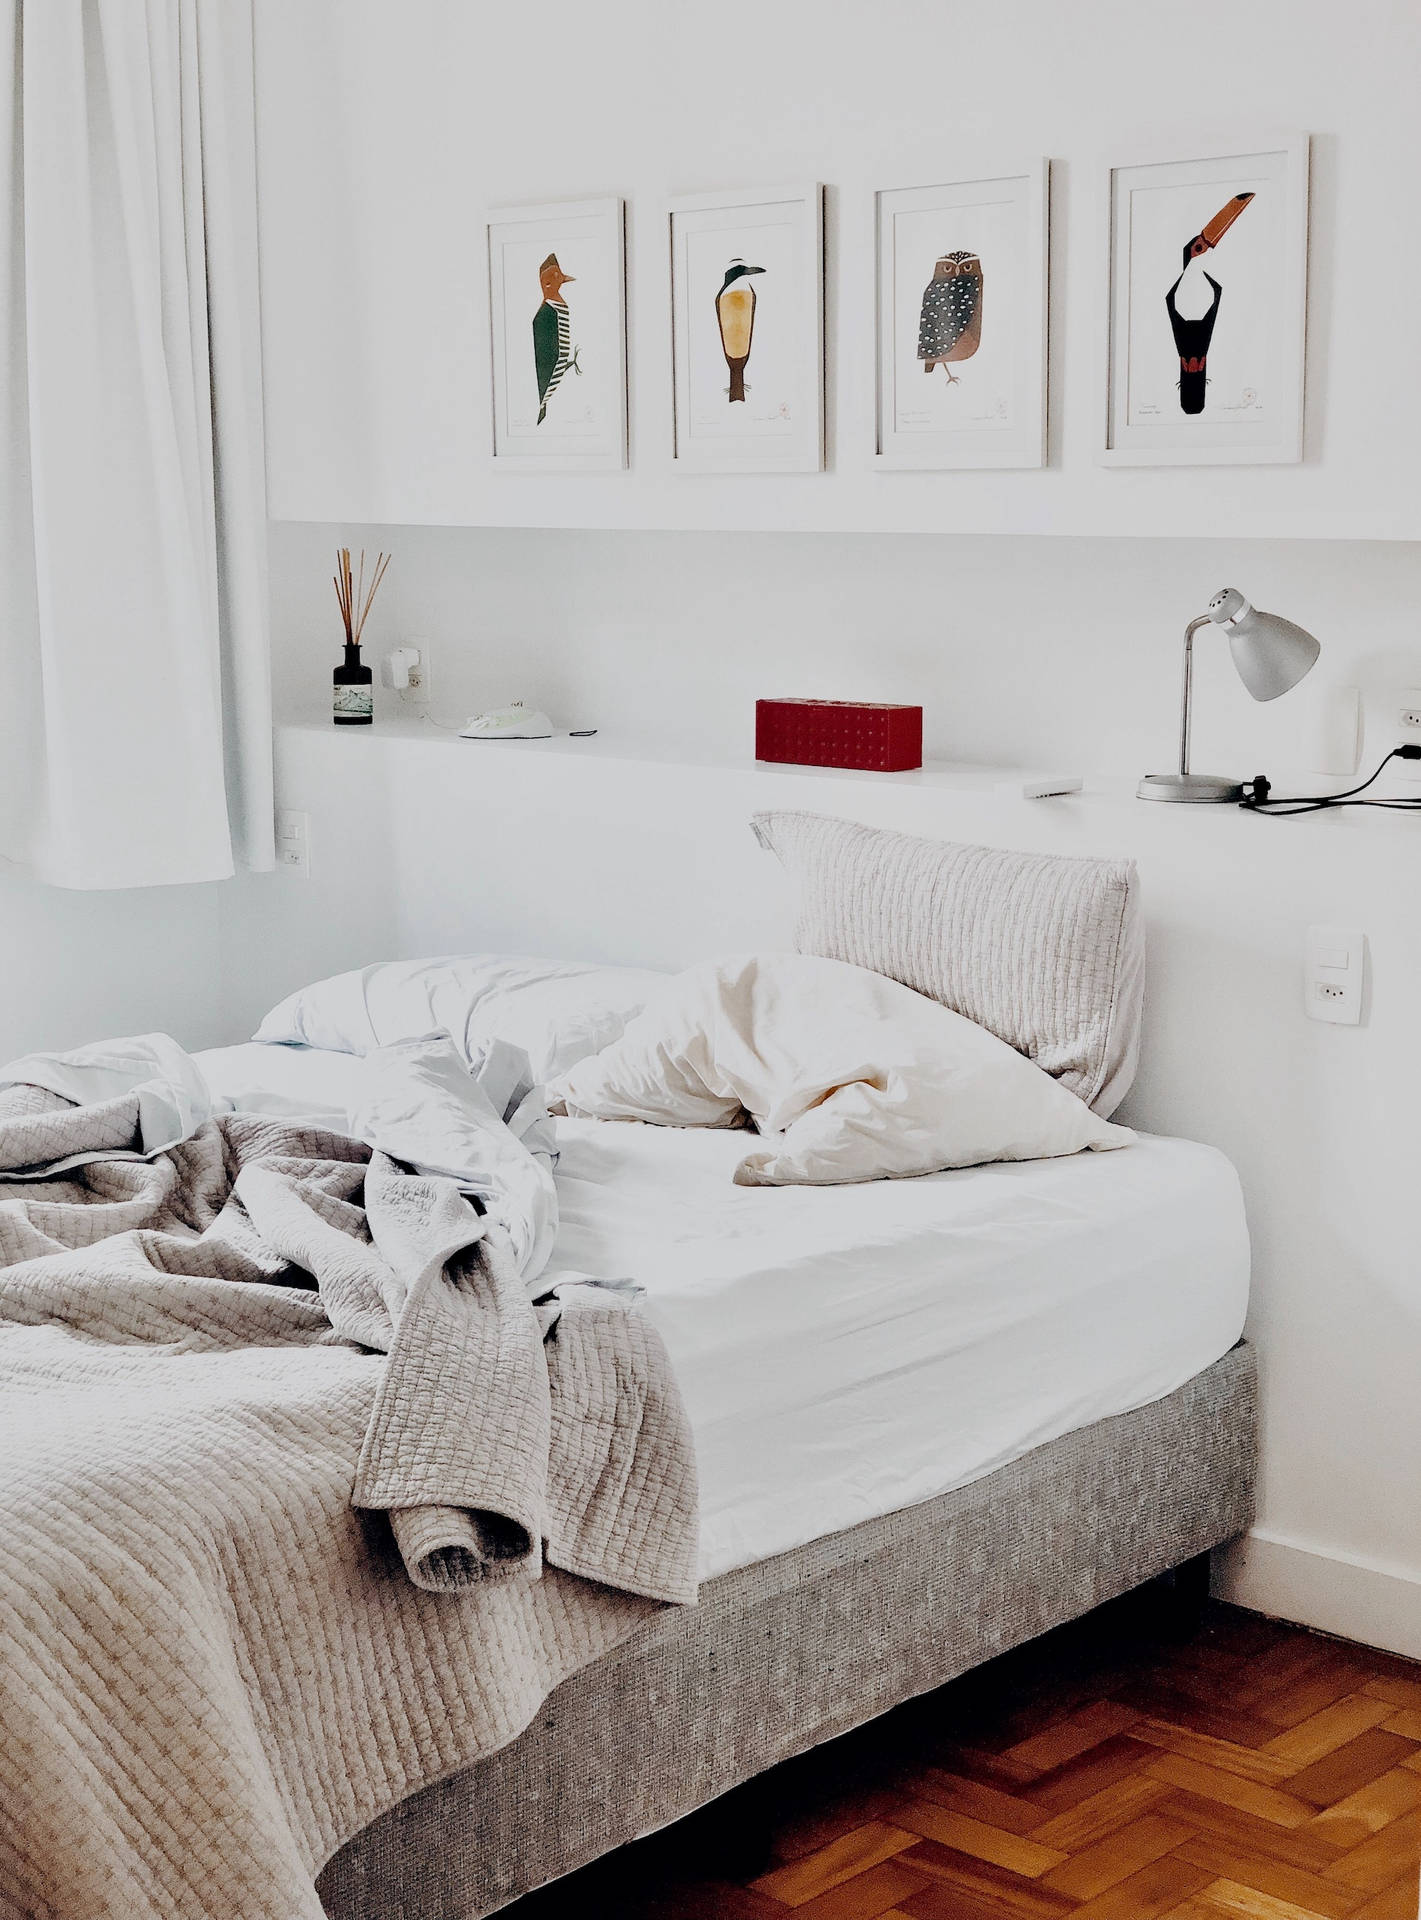 Download Serene, Modern Bedroom Design Wallpaper | Wallpapers.com